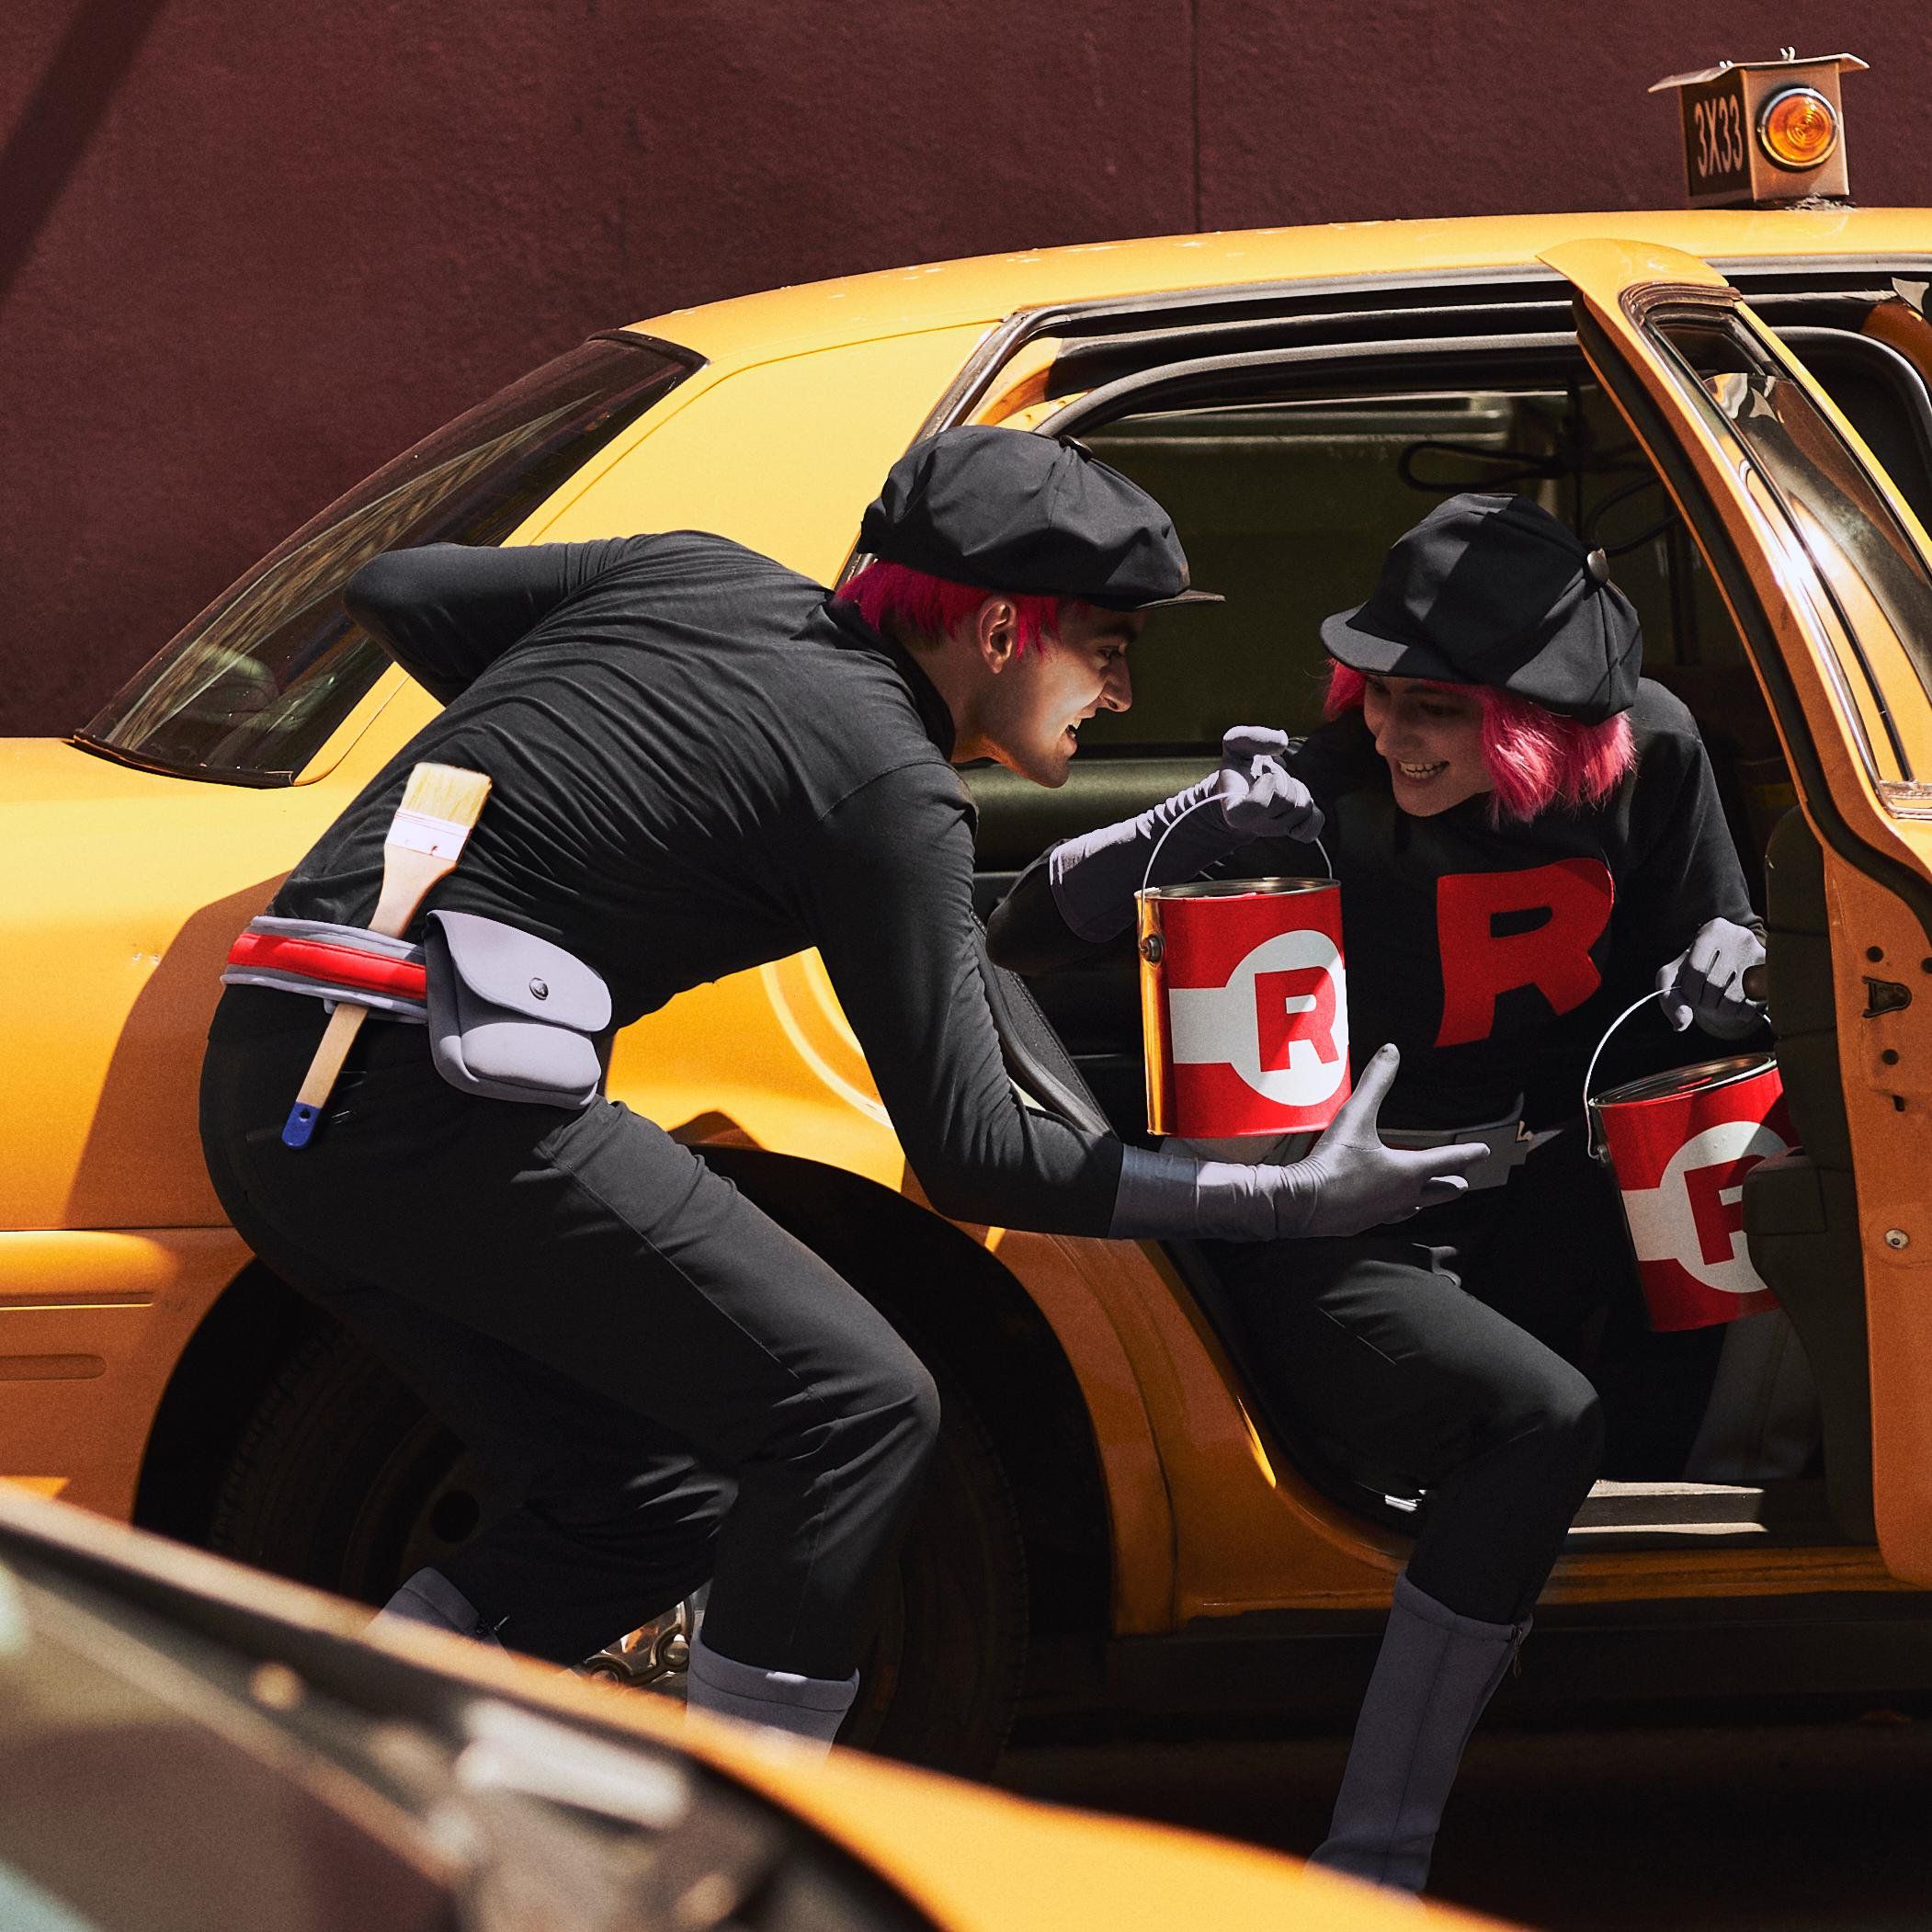 Team Rocket New York taxi